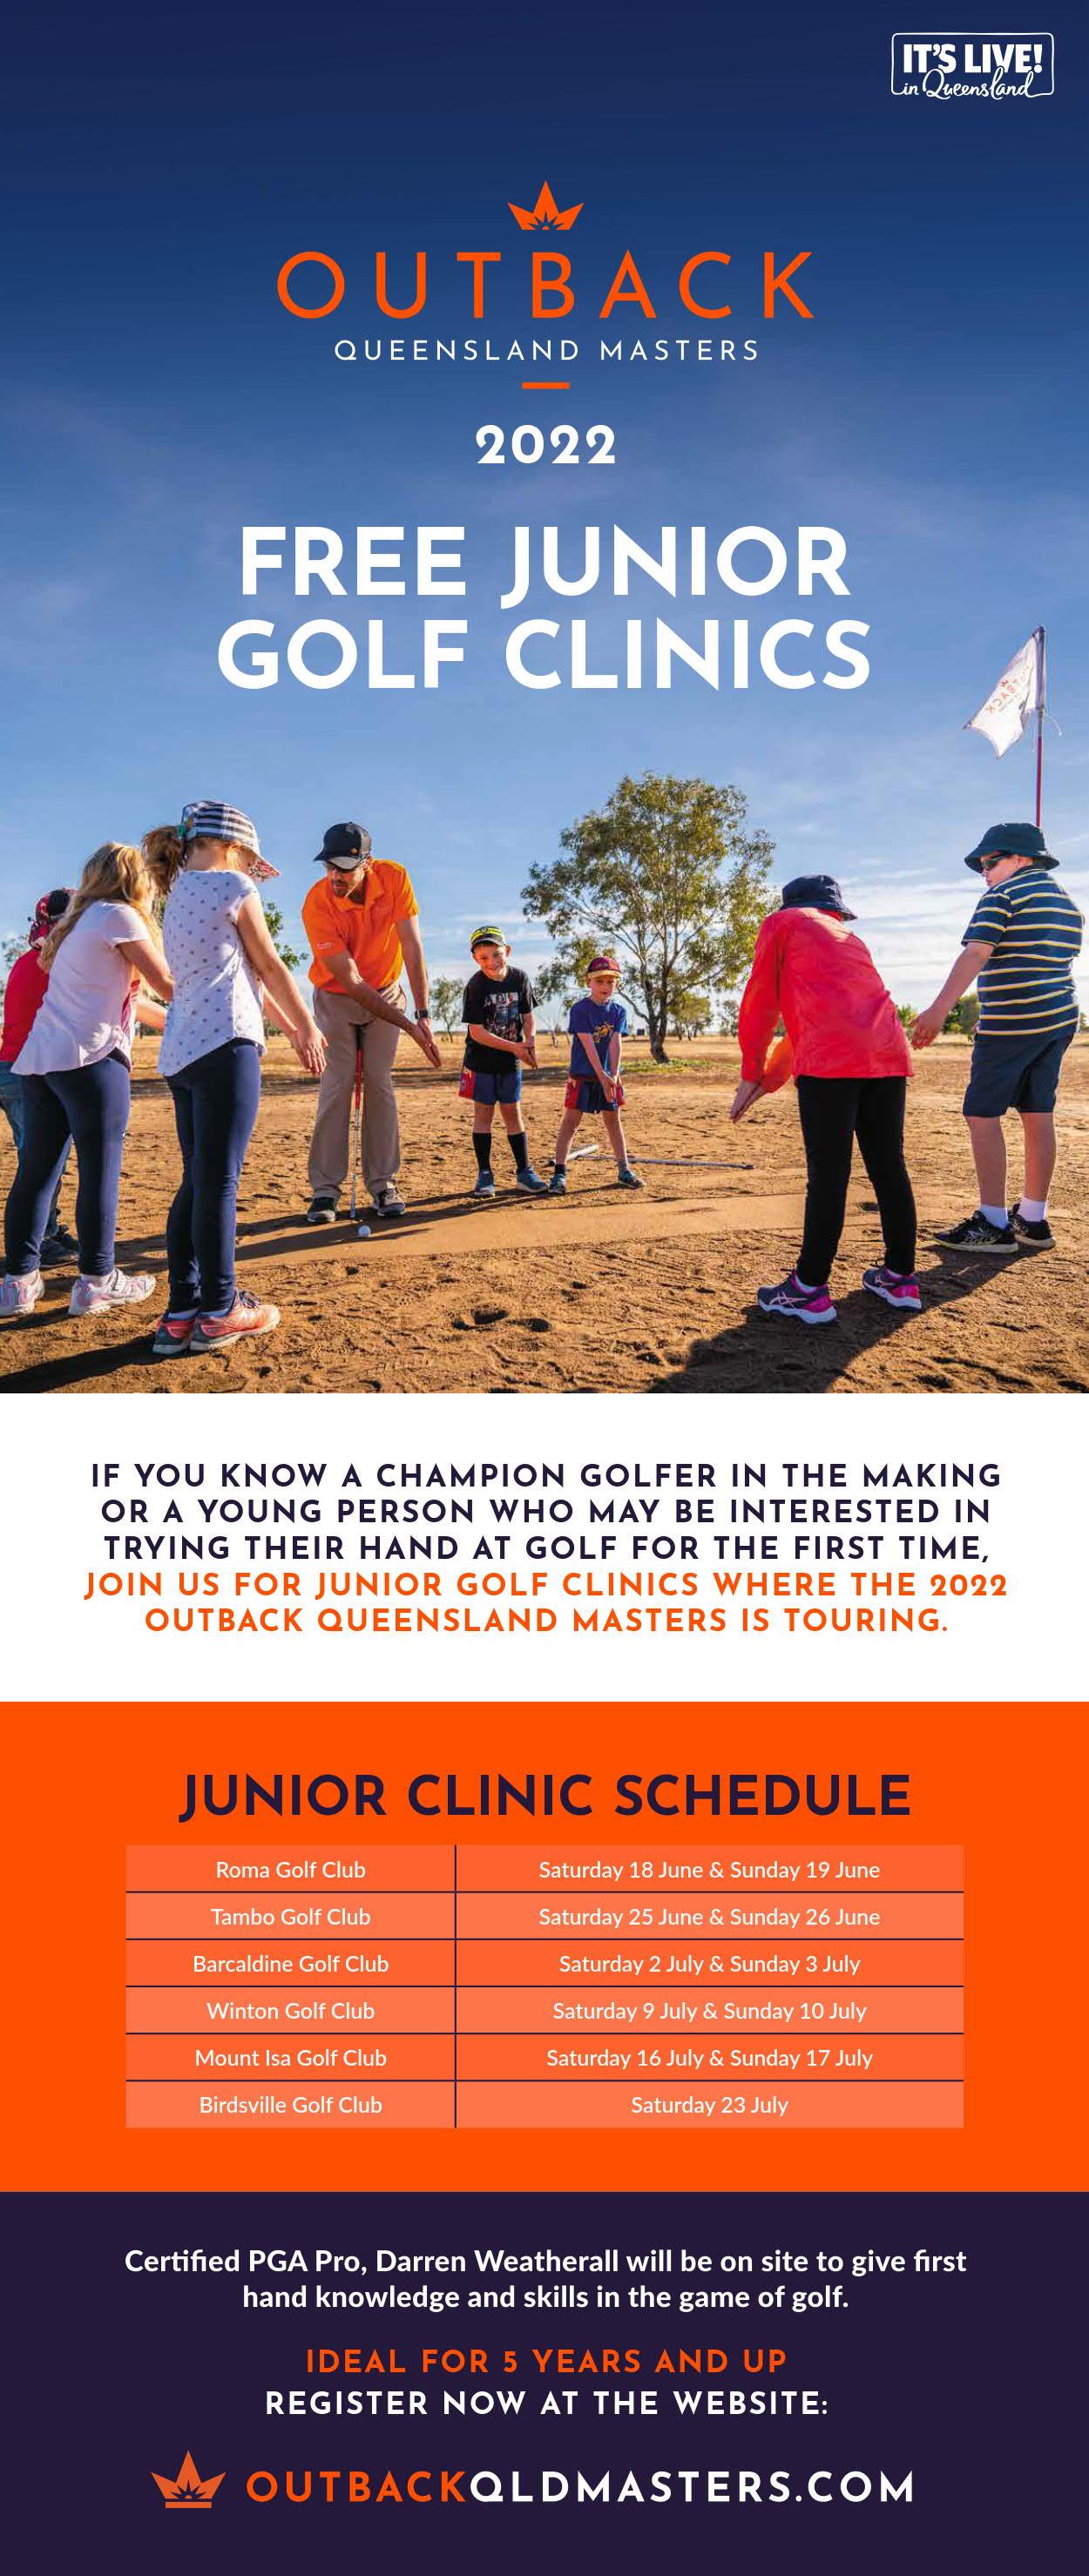 Outback Queensland Masters - Free junior golf clinics